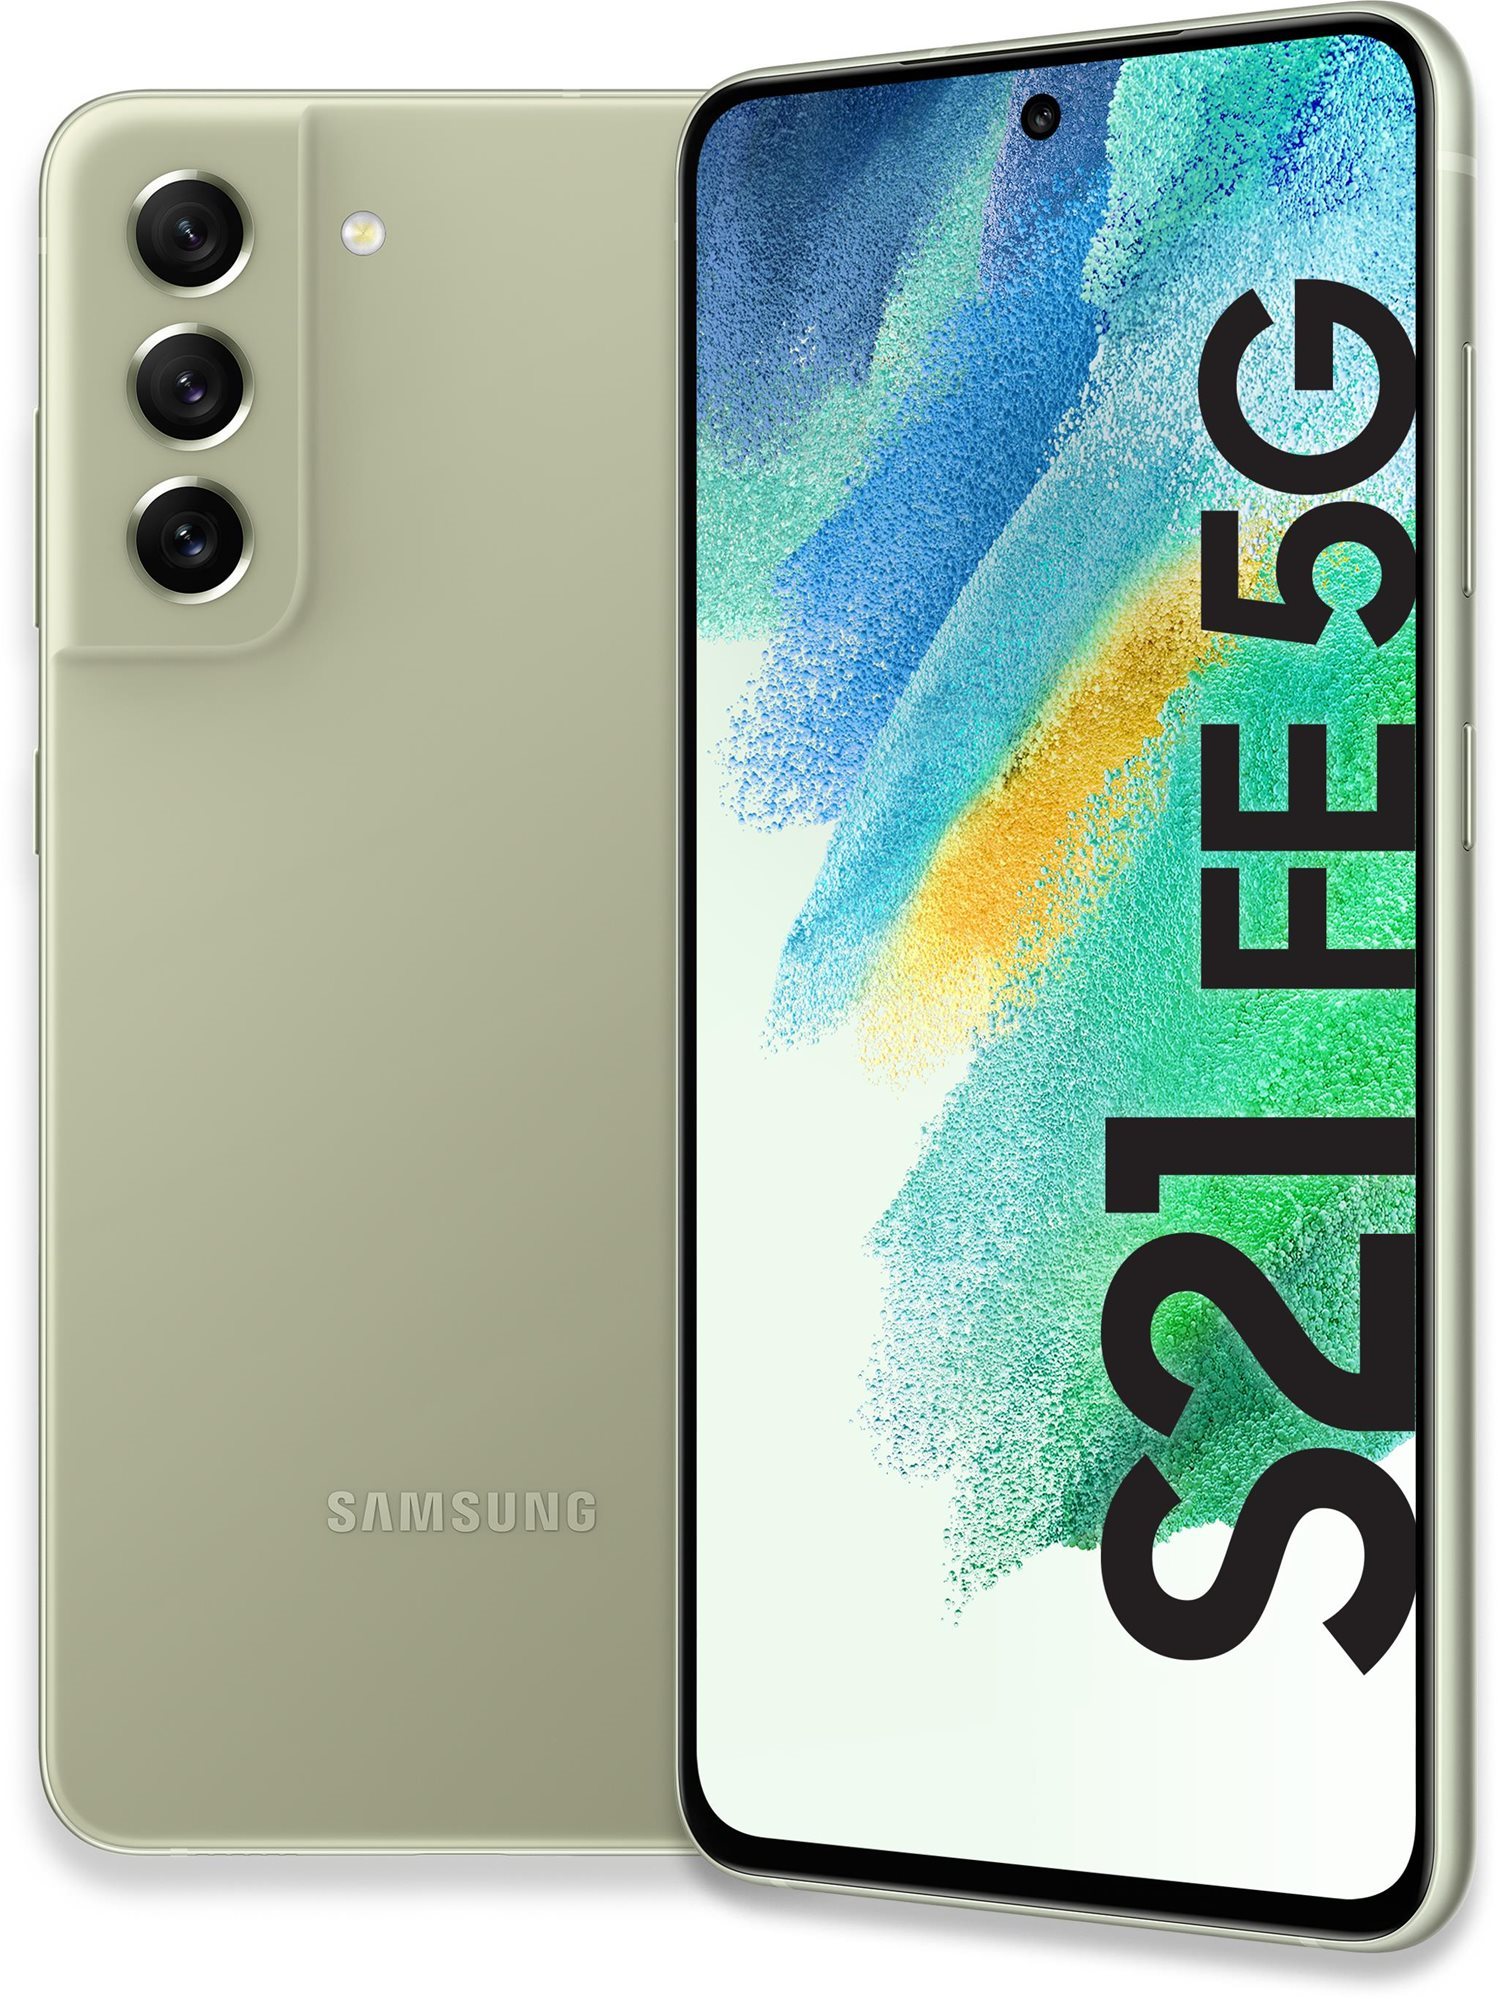 Mobiltelefon Samsung Galaxy S21 FE 5G 128GB zöld